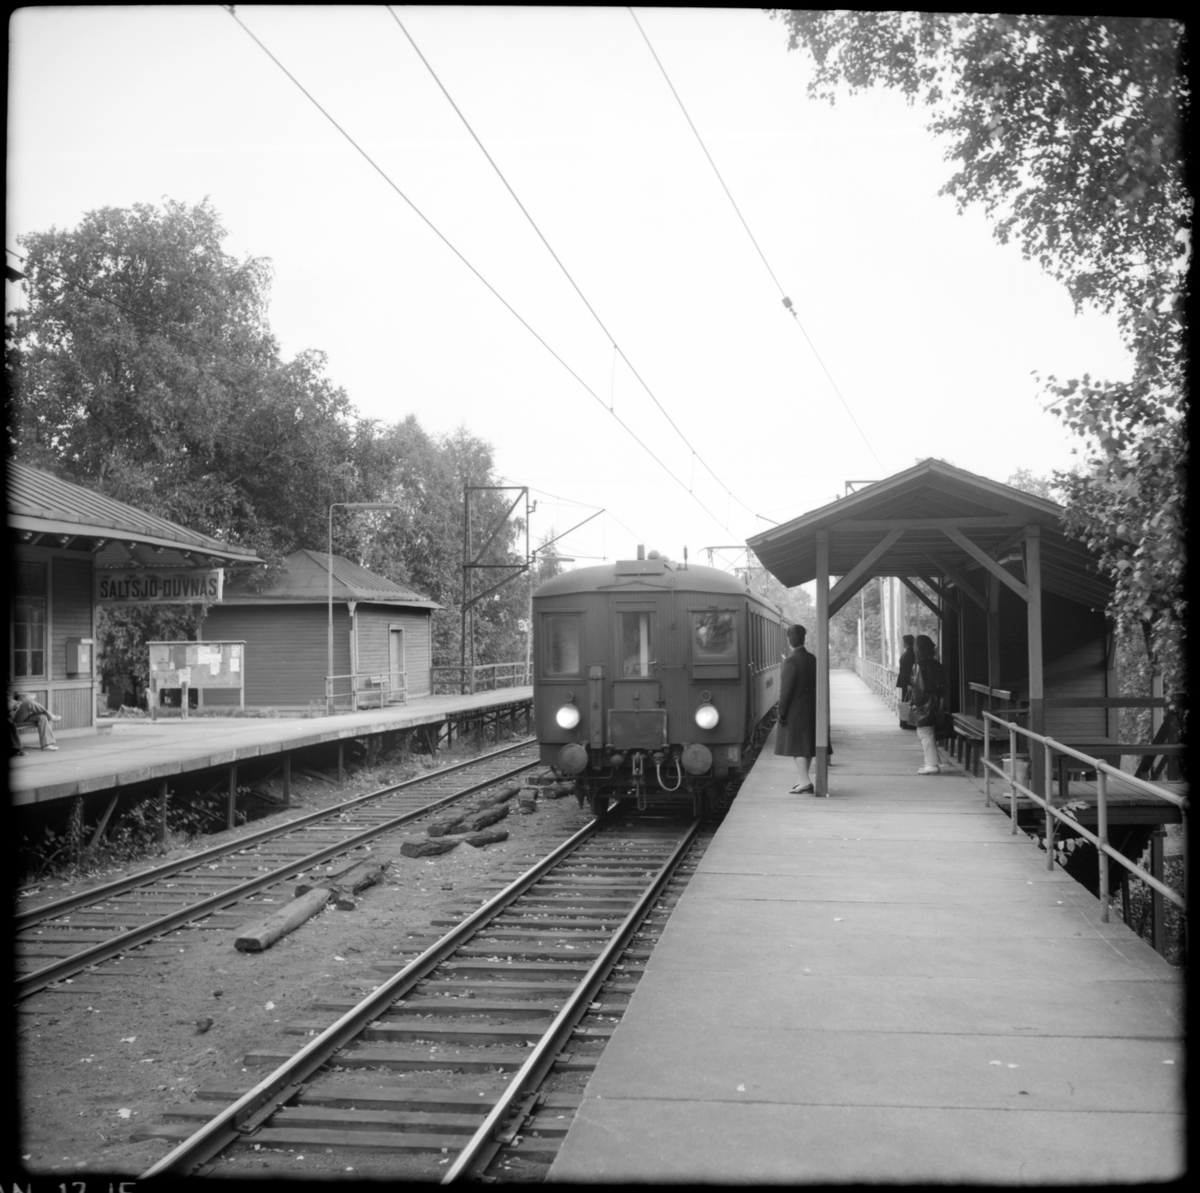 Saltsjö-Duvnäs station, Saltsjöbanan.